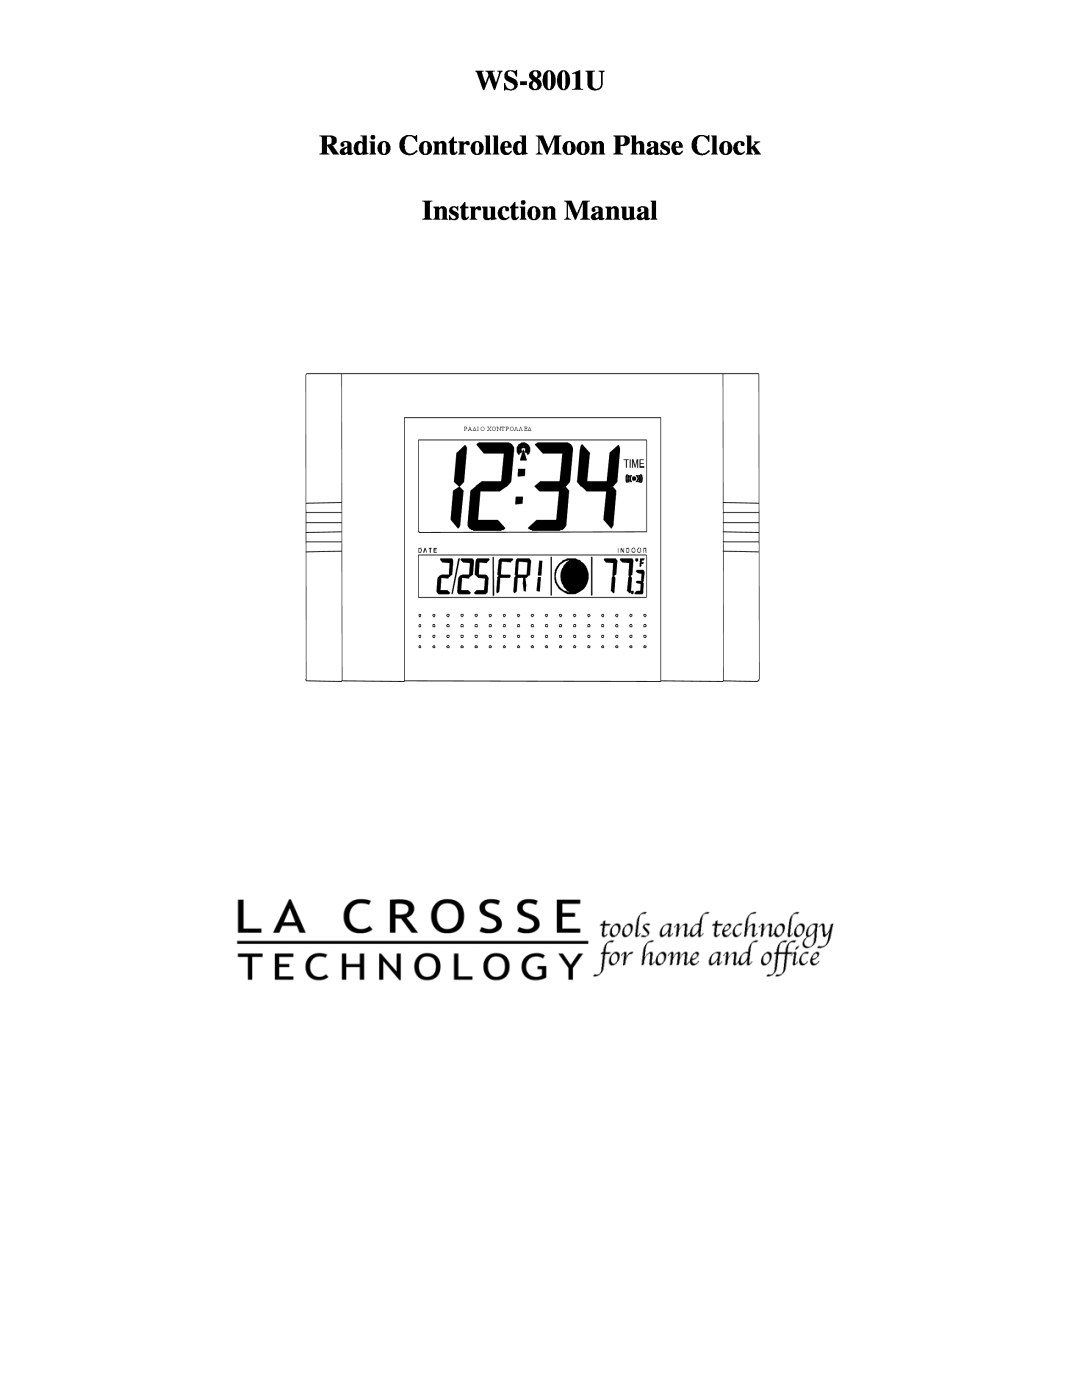 La Crosse Technology instruction manual WS-8001U Radio Controlled Moon Phase Clock Instruction Manual 